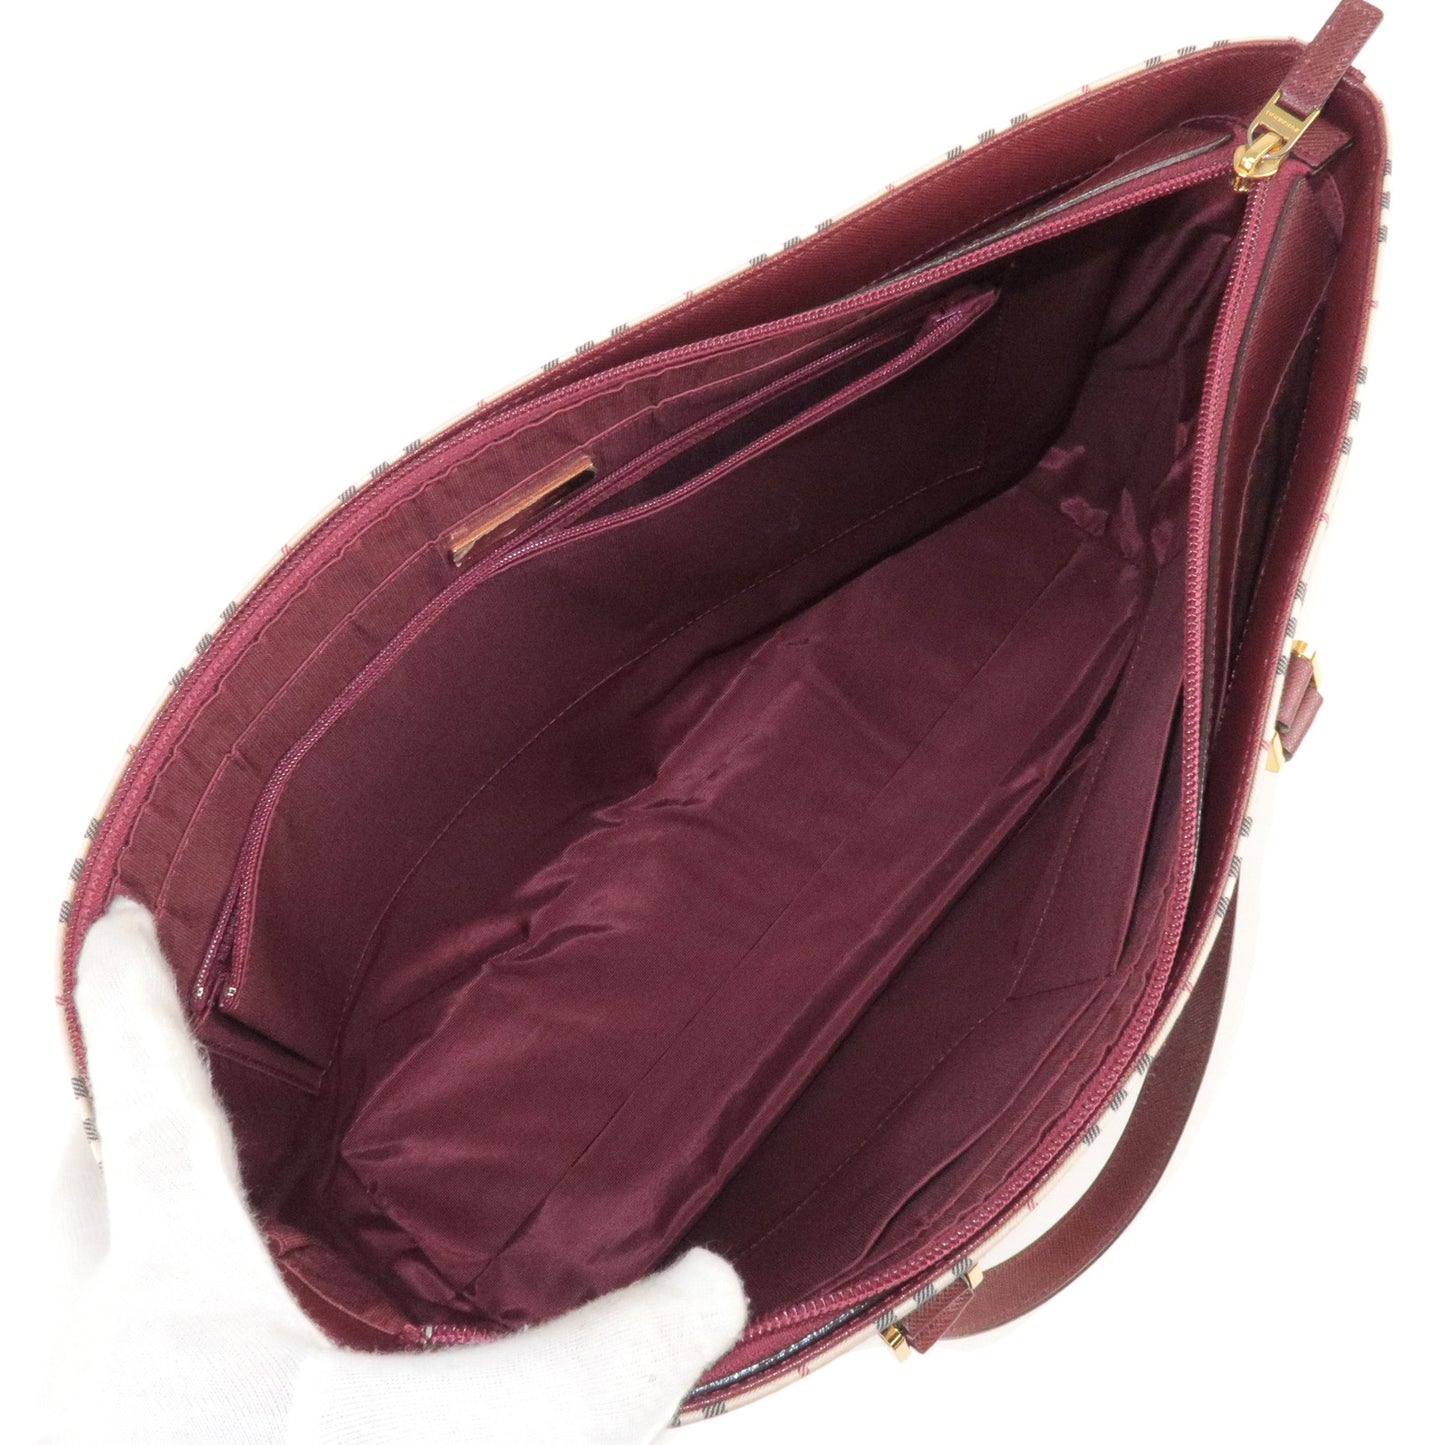 BURBERRY Nova Plaid Canvas Leather Tote Bag Hand Bag Beige Red